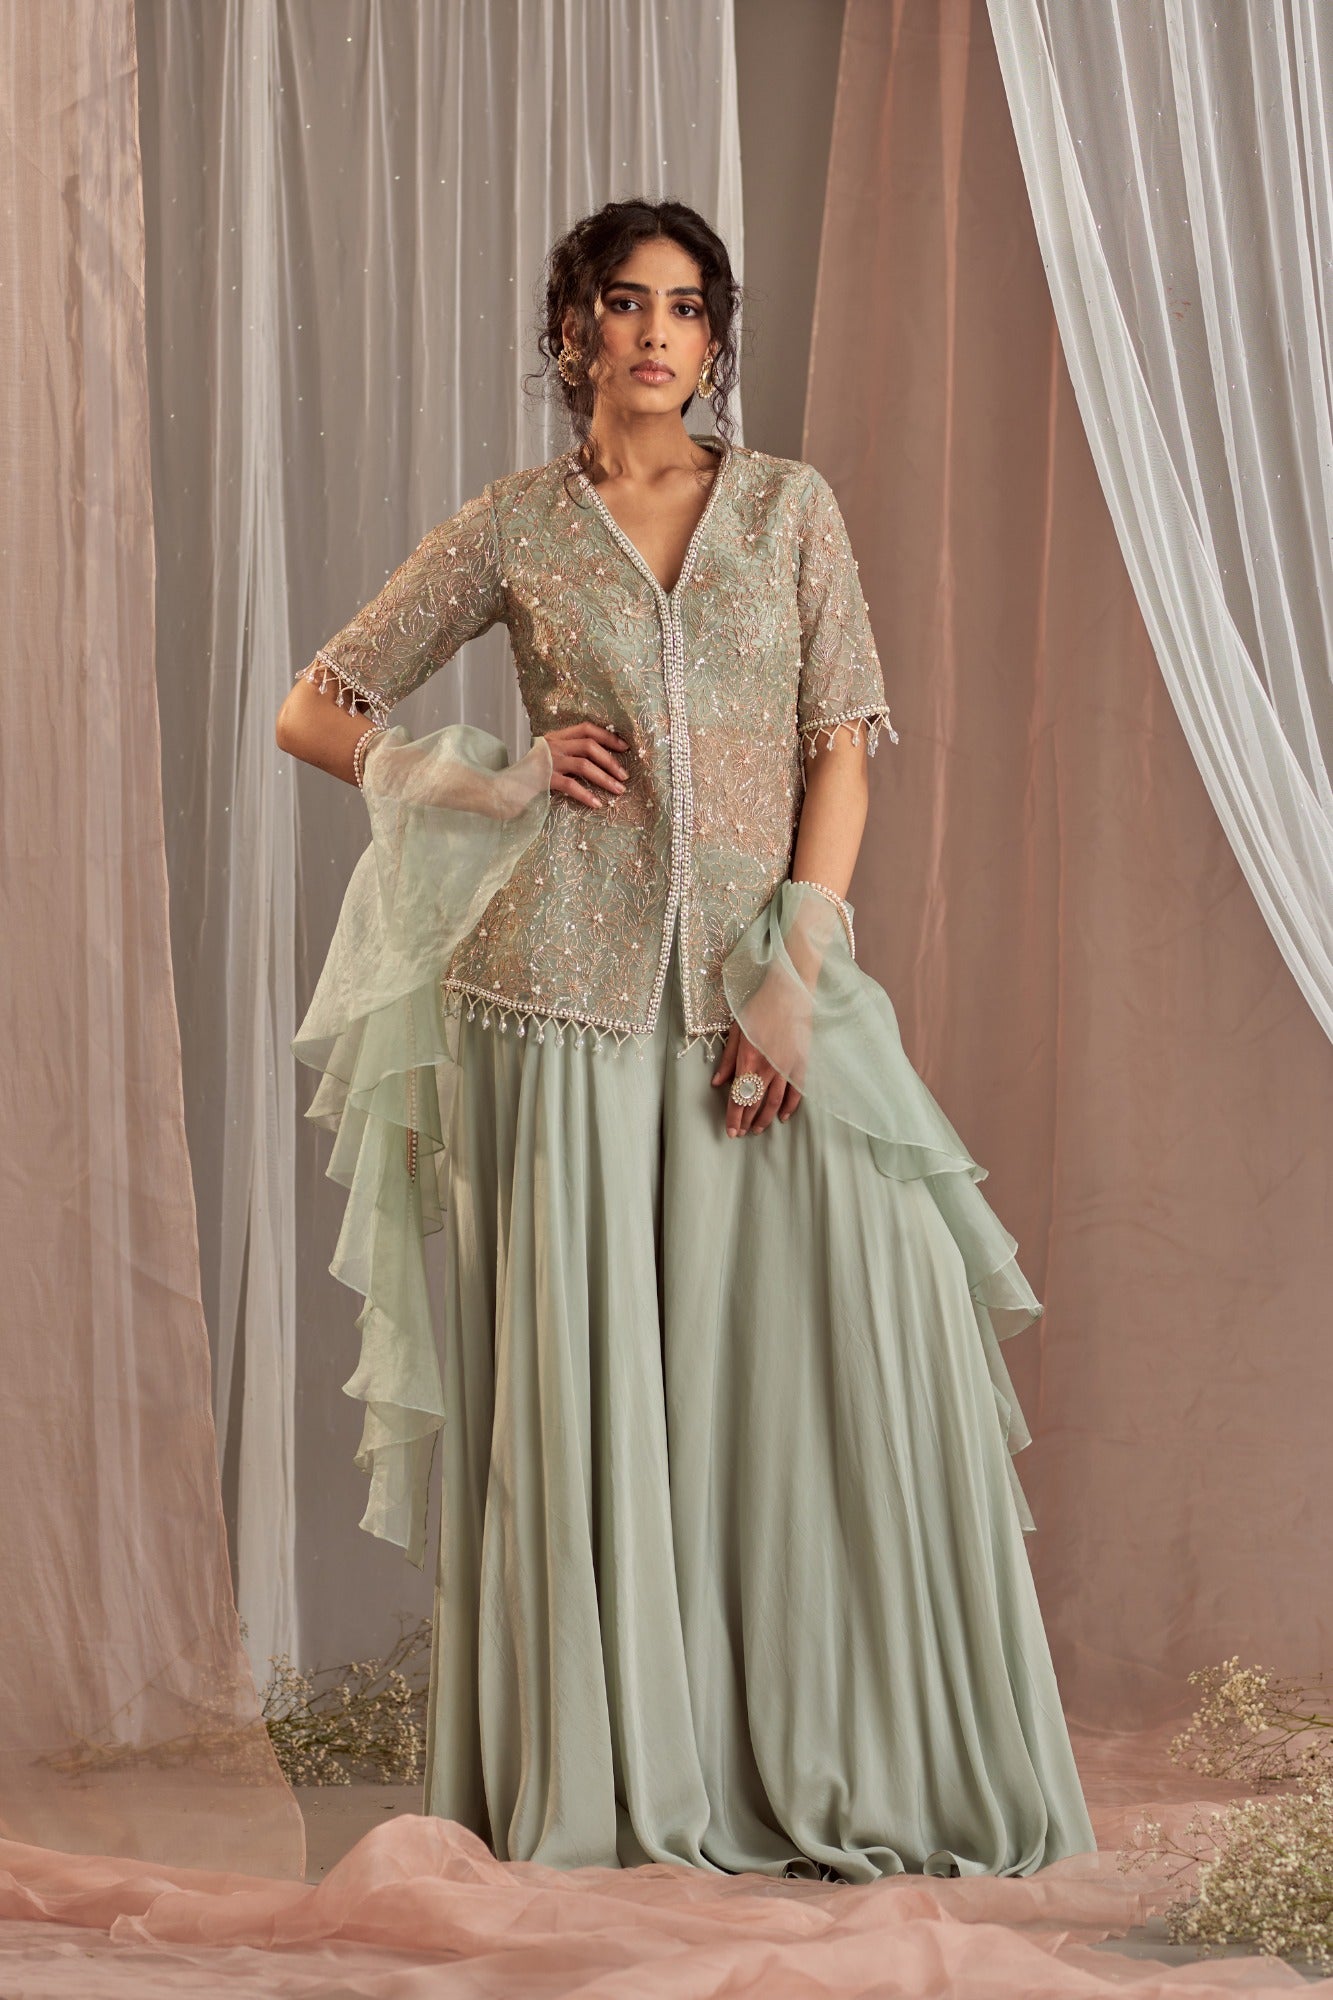 30+ Gorgeous Sharara Dress For Wedding days